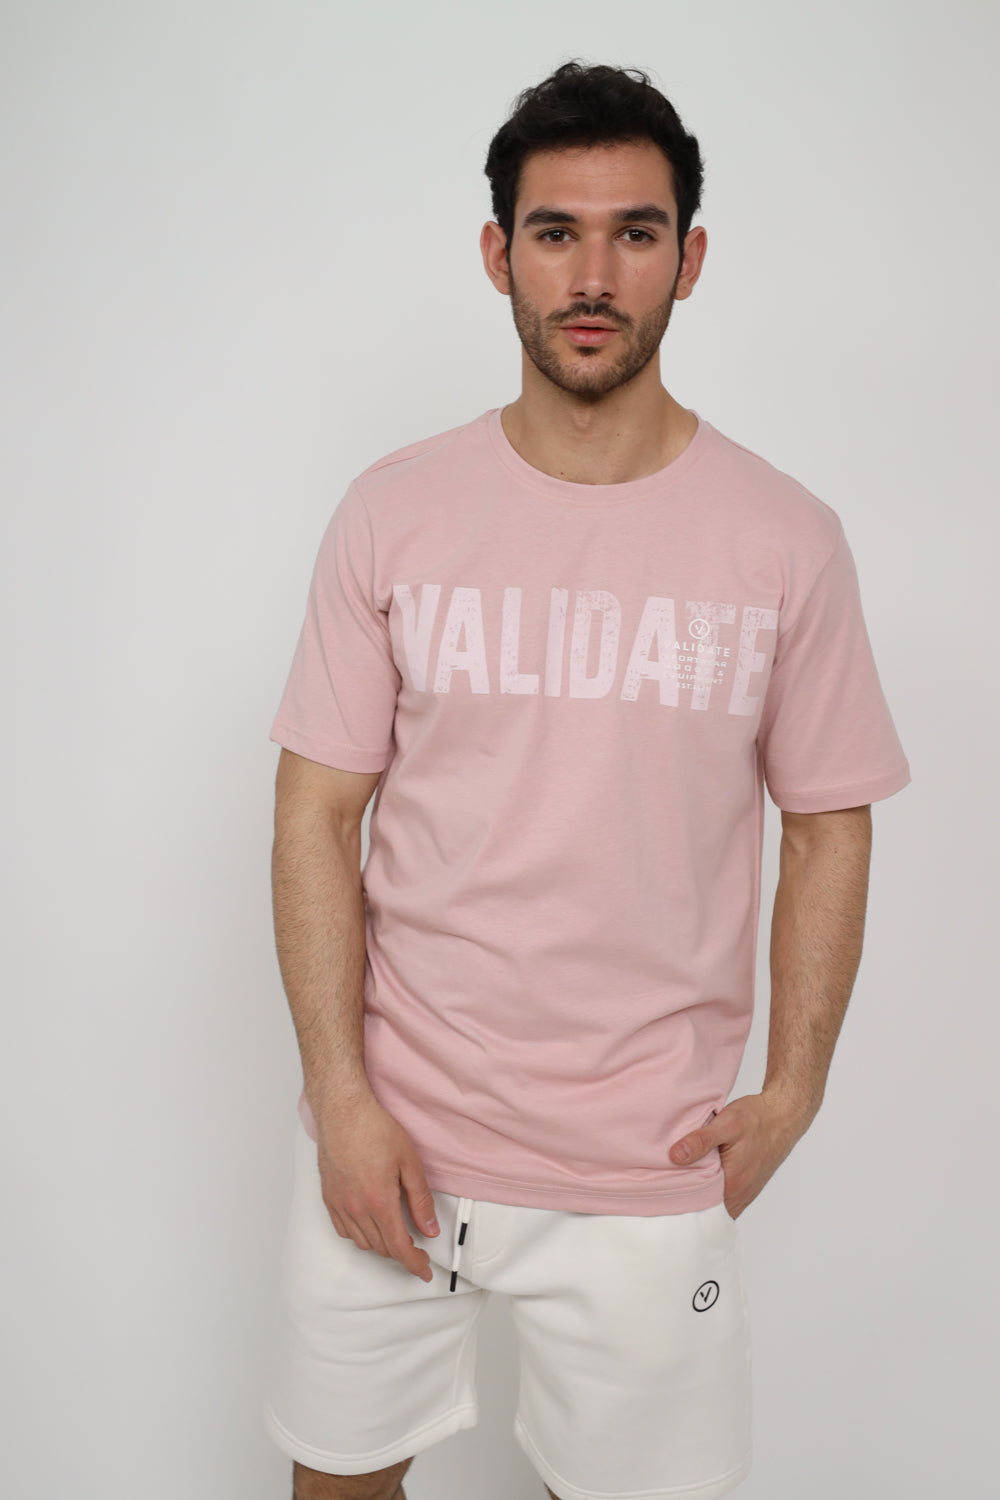 Validate Sunset Pink Deano T-Shirt